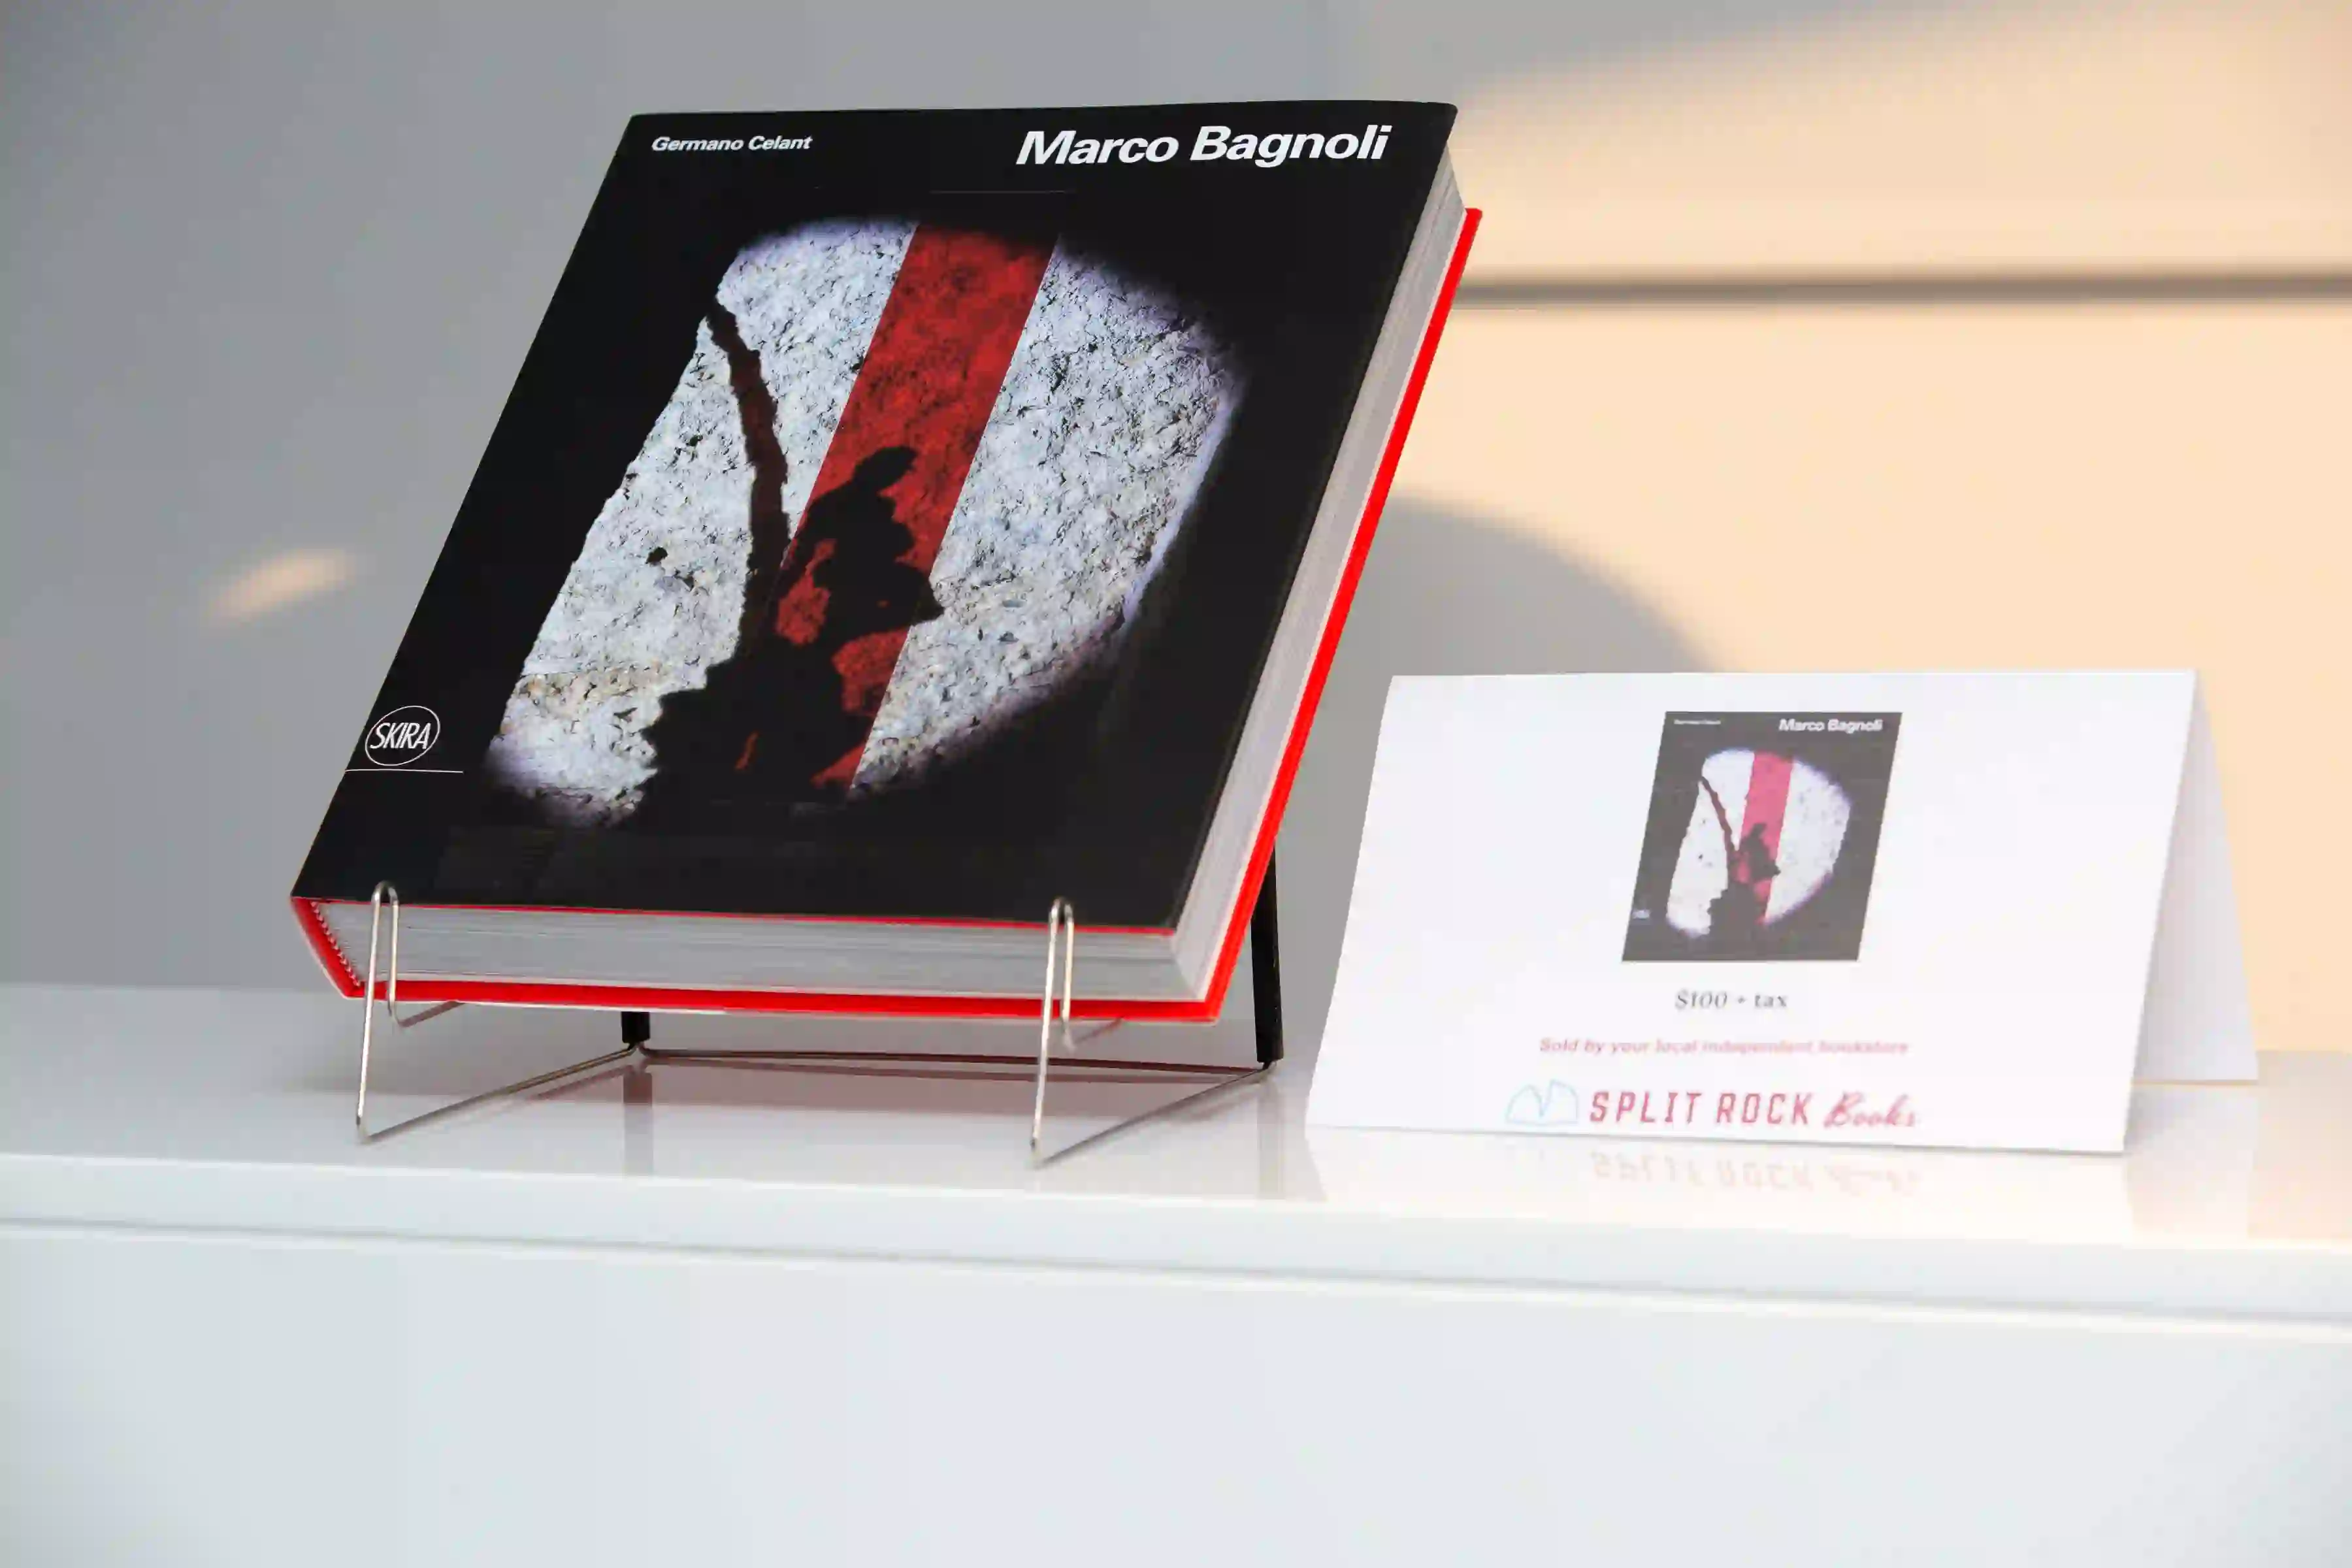 Book display of "Marco Bagnoli" at Magazzino Italian Art Foundation on September 28, 2019